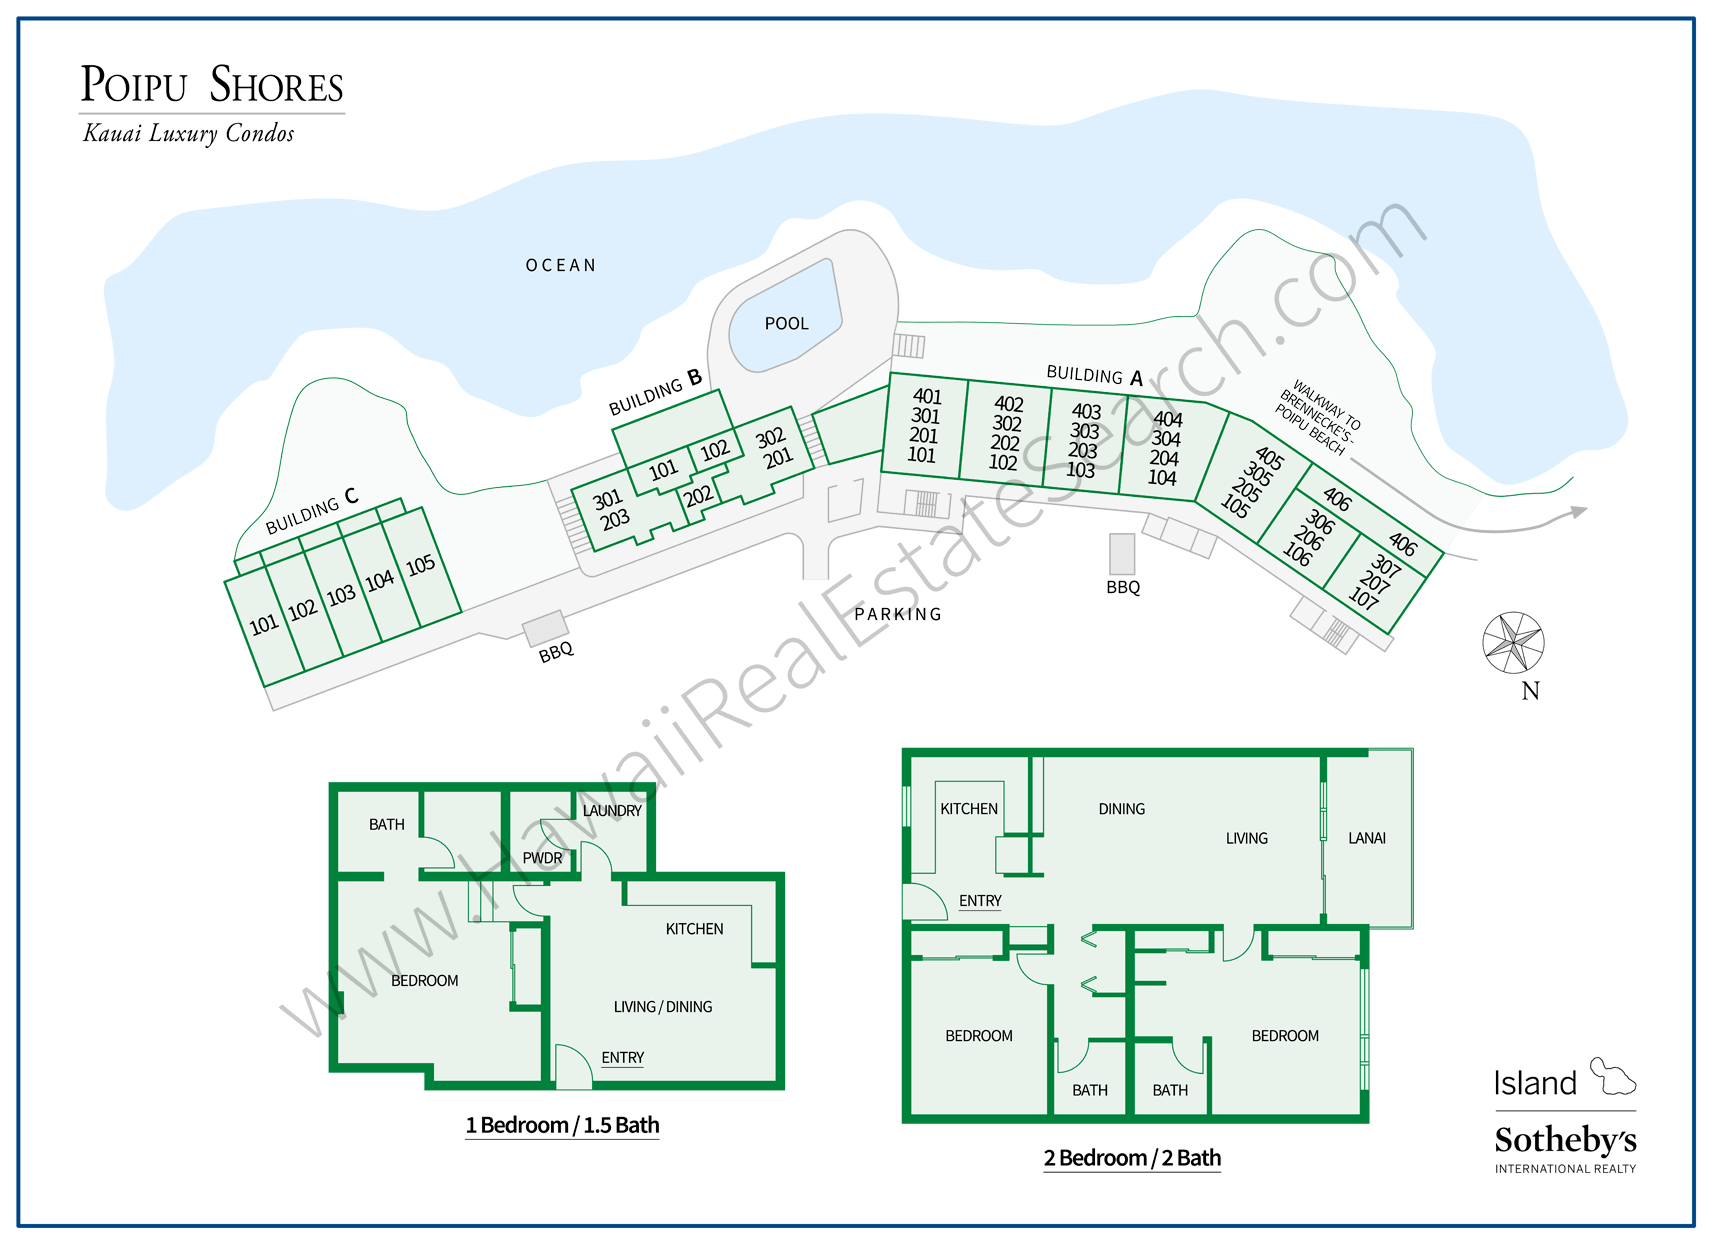 Poipu Shores Property Map